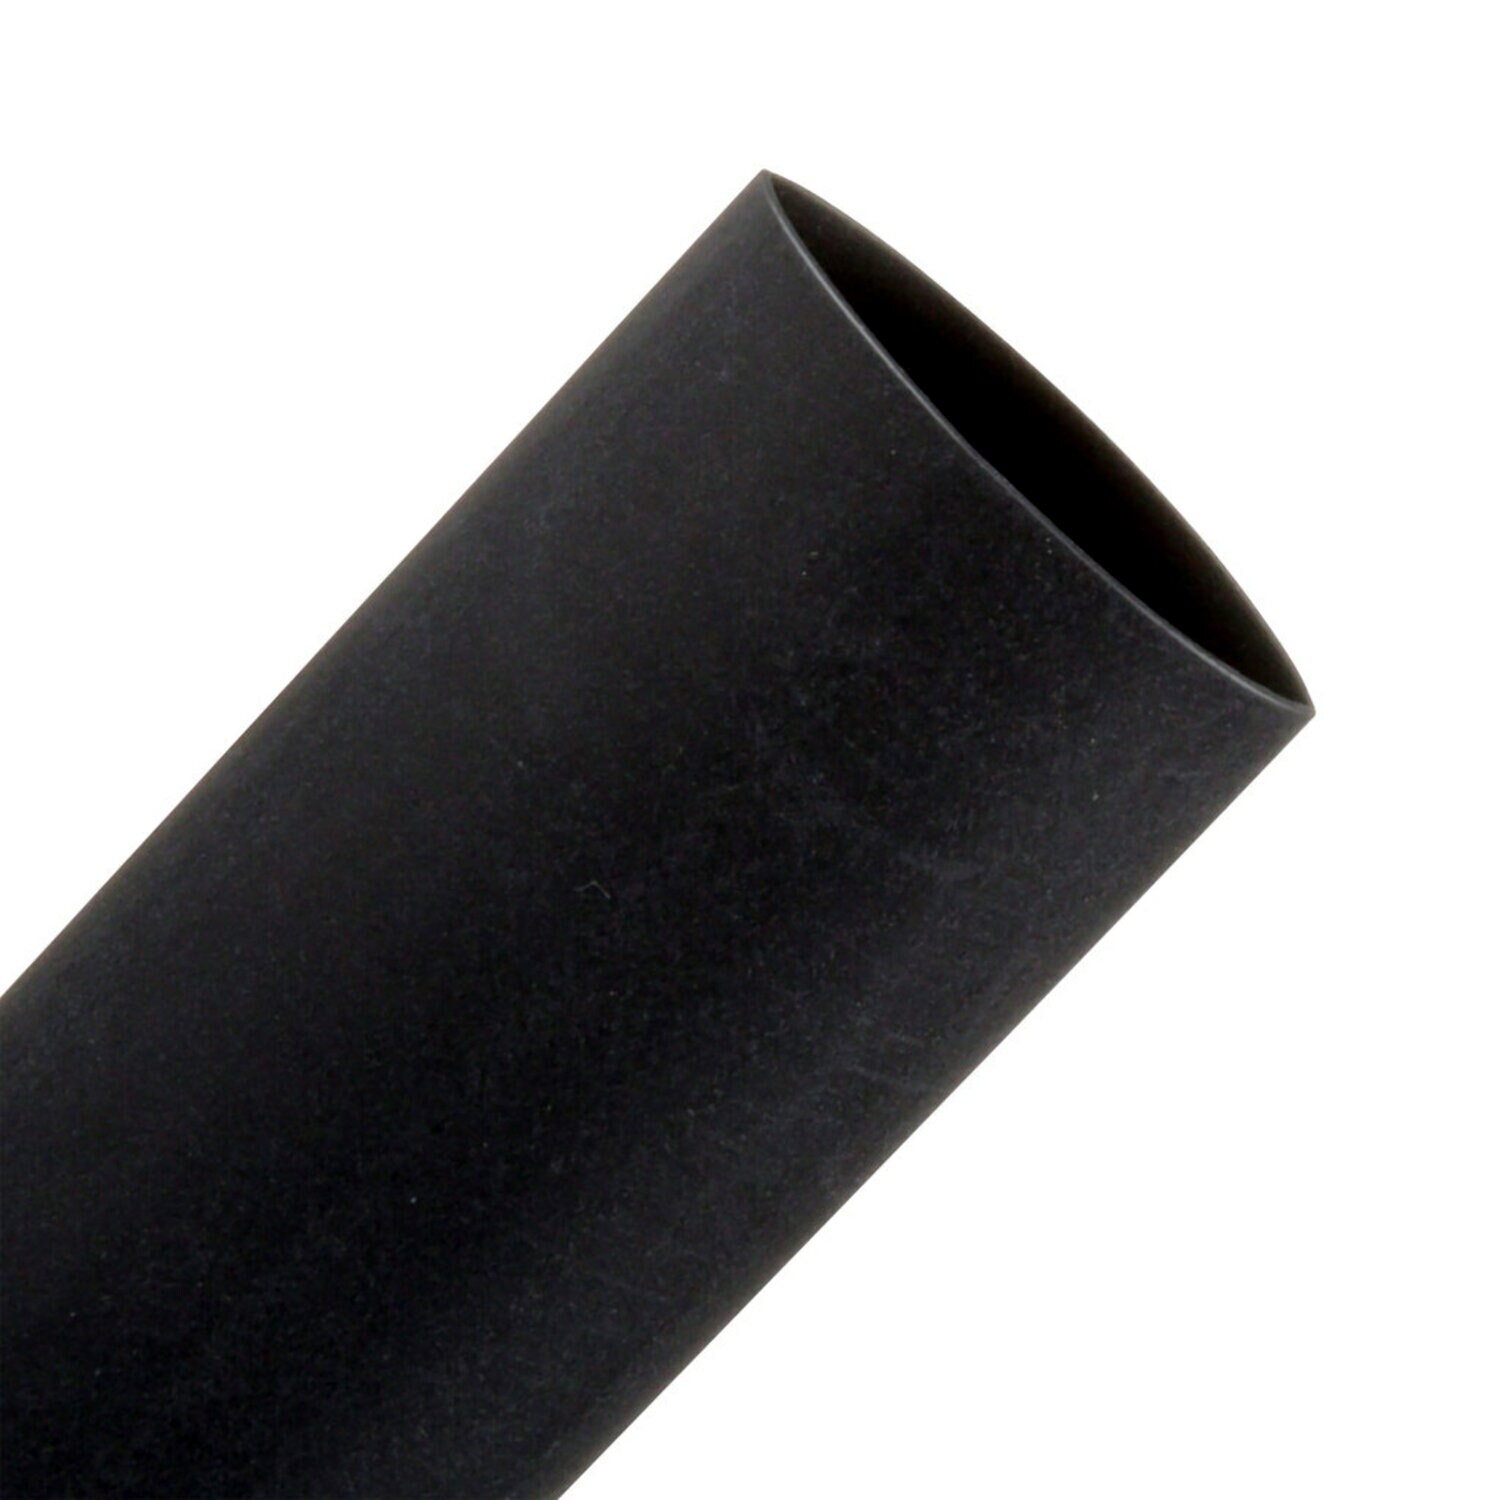 7100030629 - 3M Heat Shrink Thin-Wall Tubing FP-301-3/4-Black-50`: 50 ft spool
length, 150 ft/case